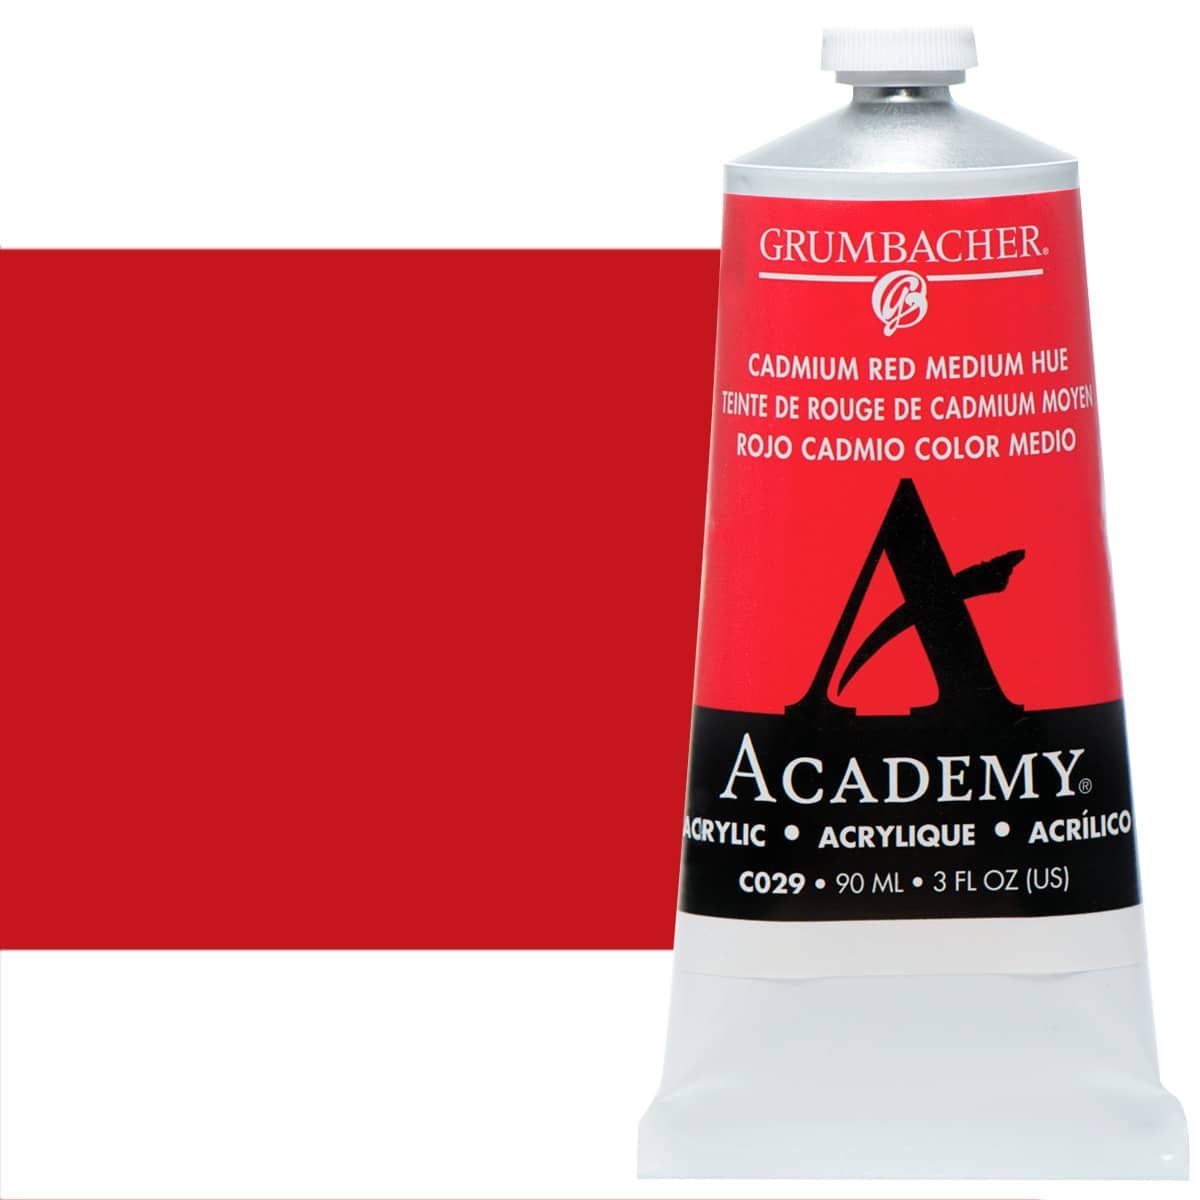 Grumbacher Academy Acrylics Cadmium Red Medium Hue 90 ml